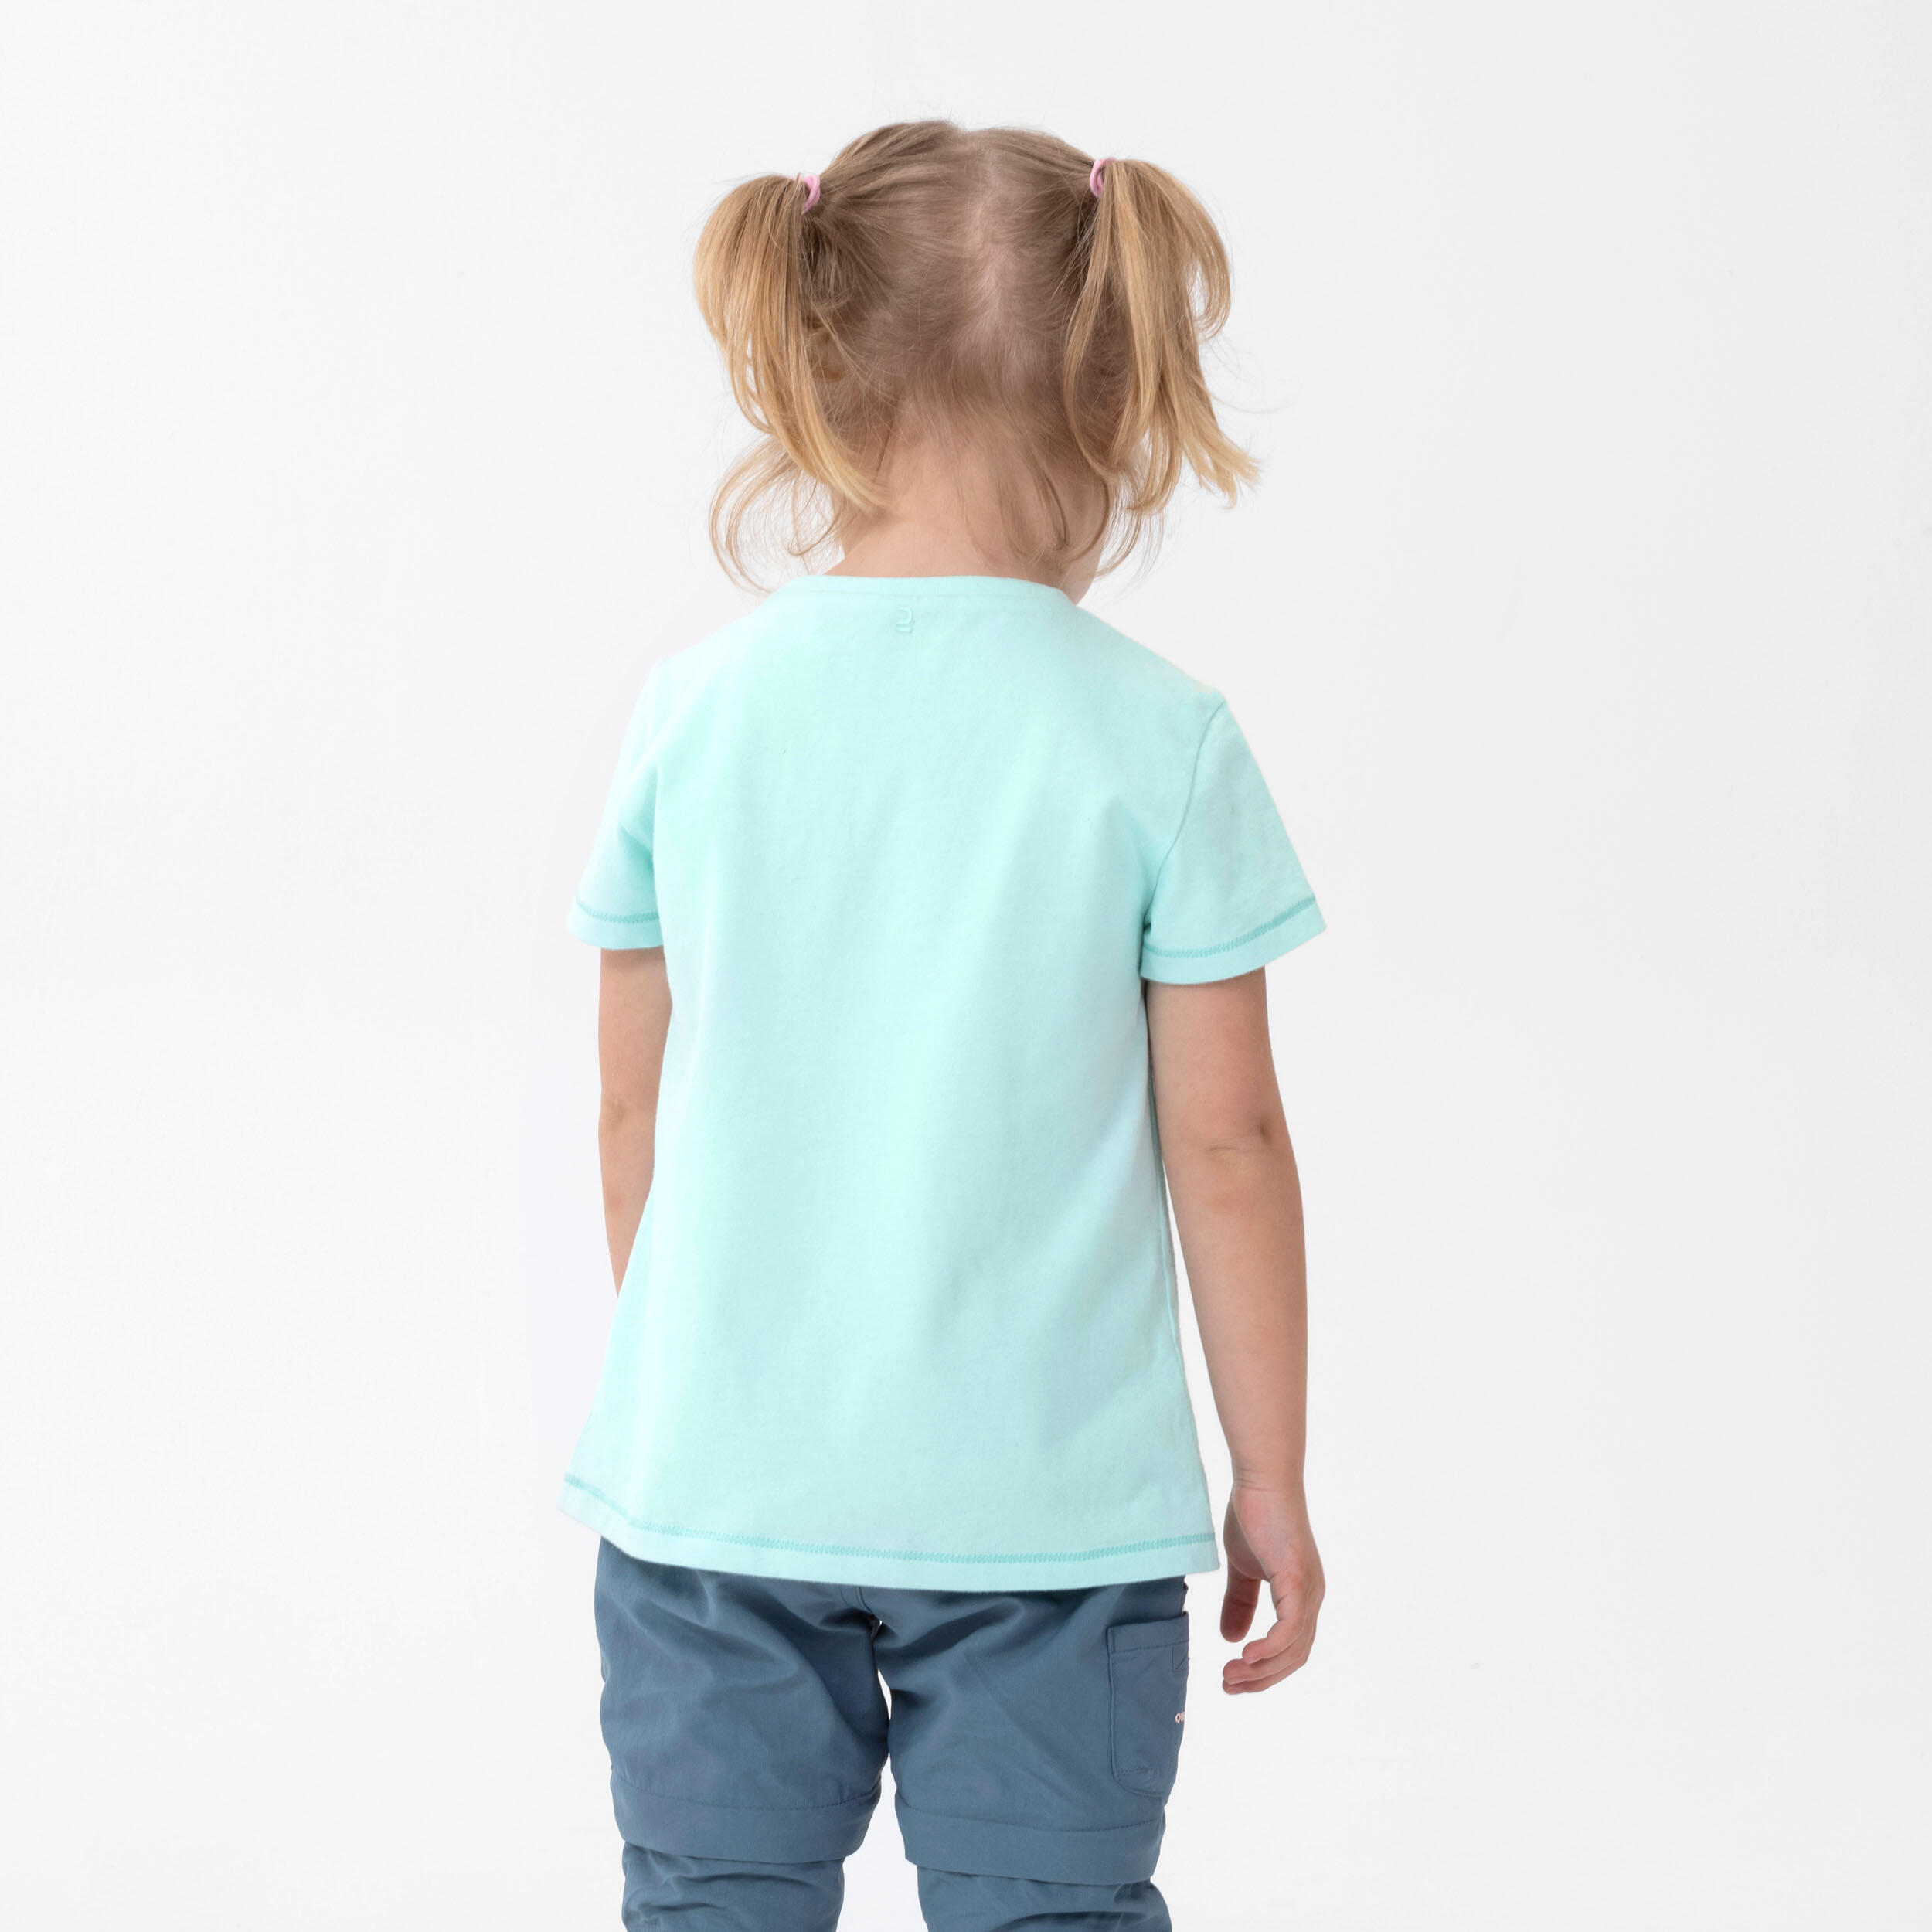 Kids' Hiking T-Shirt - MH100 KID Aged 2-6 - Turquoise Glow 1/4